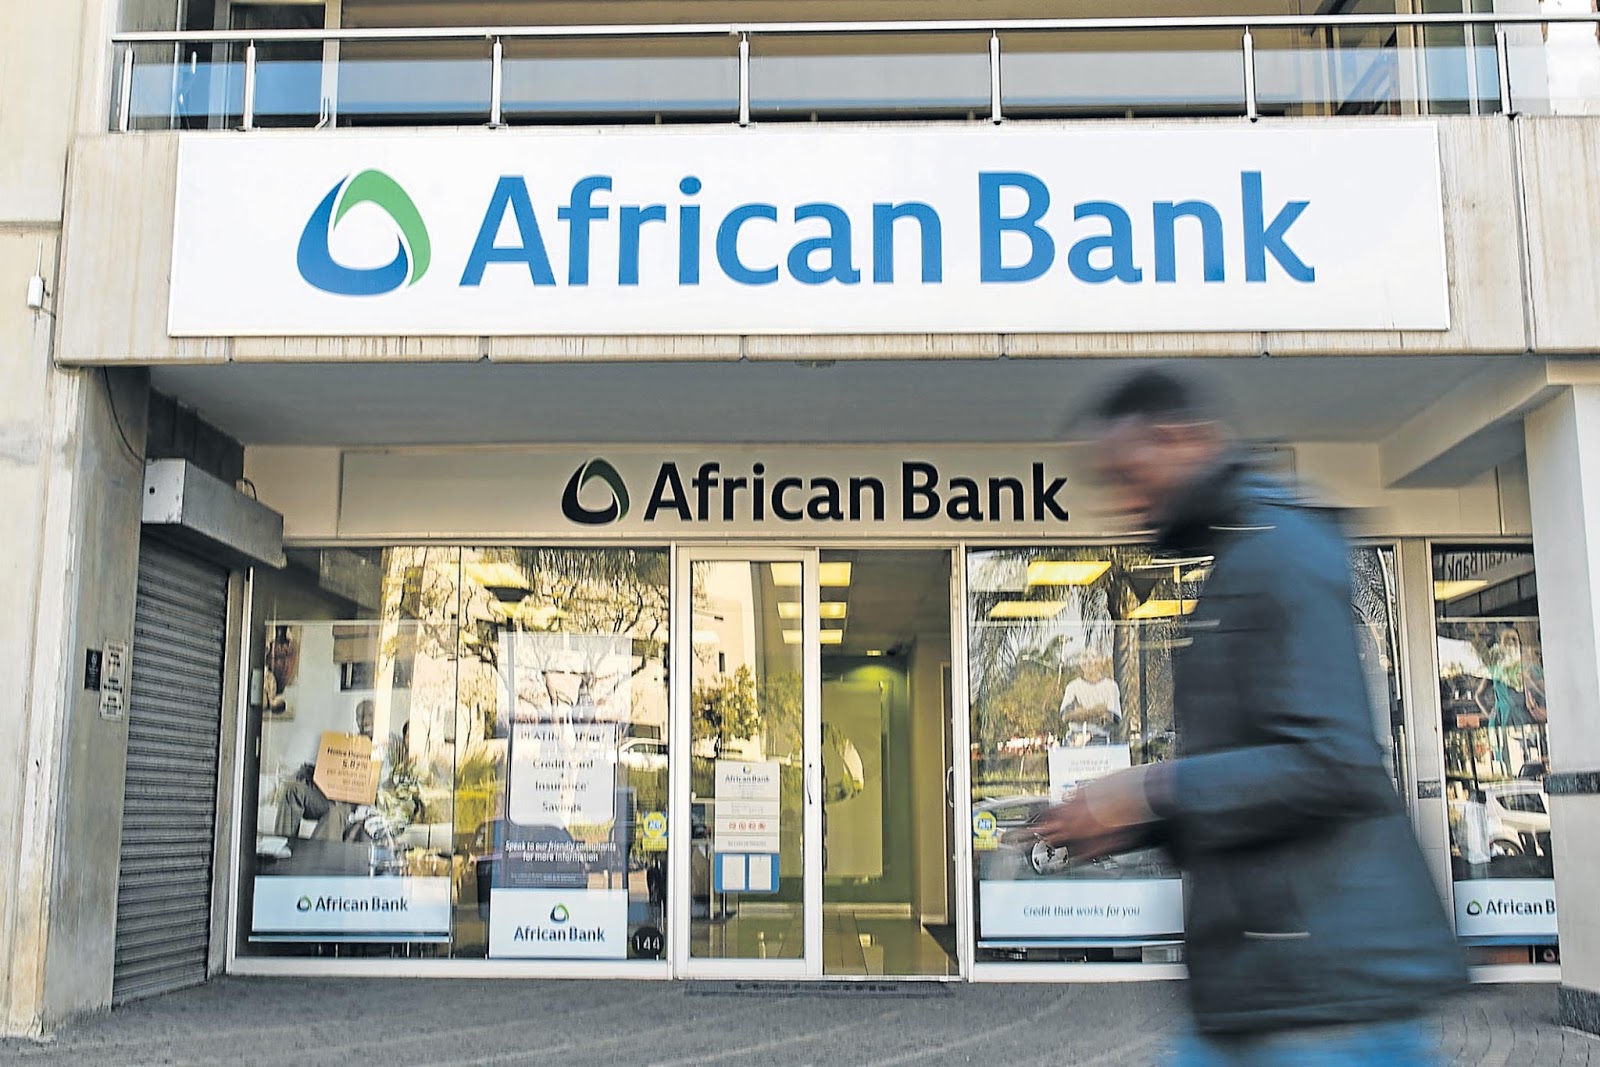 Africa bank. African Bank. Африканский банк. Efin банк. Africa Bank UAE.